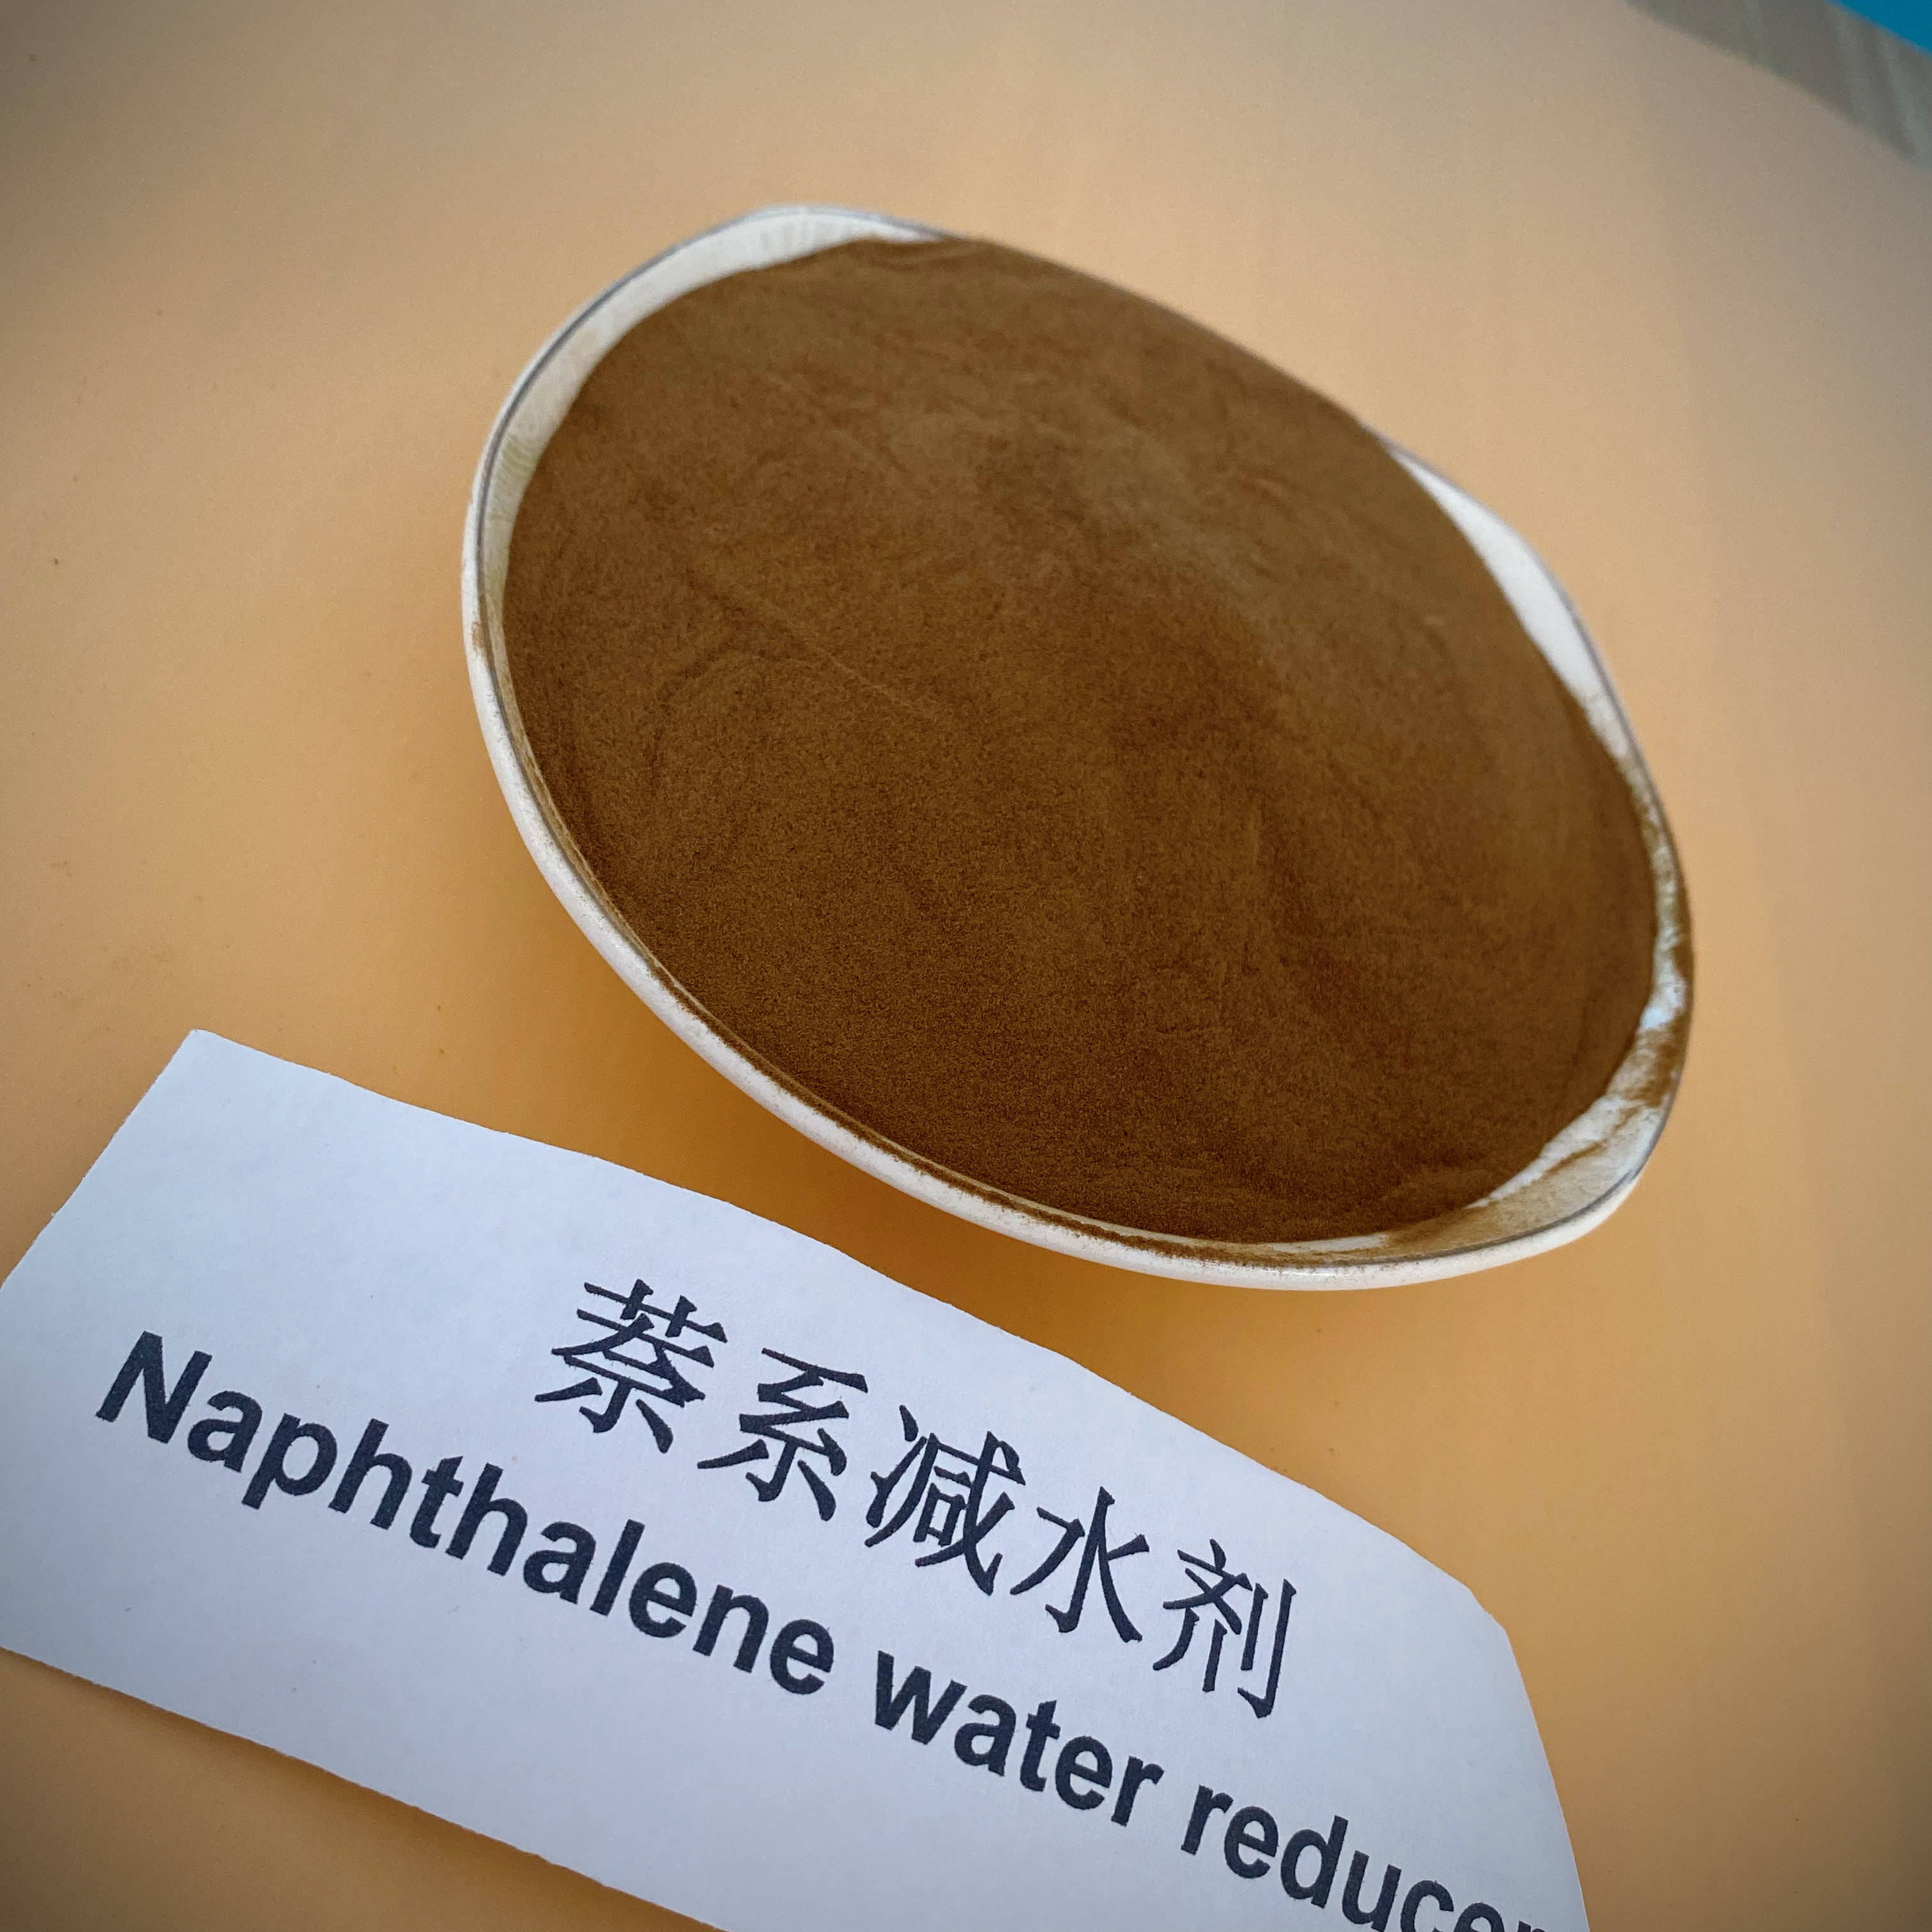 Naphthalene water reducer